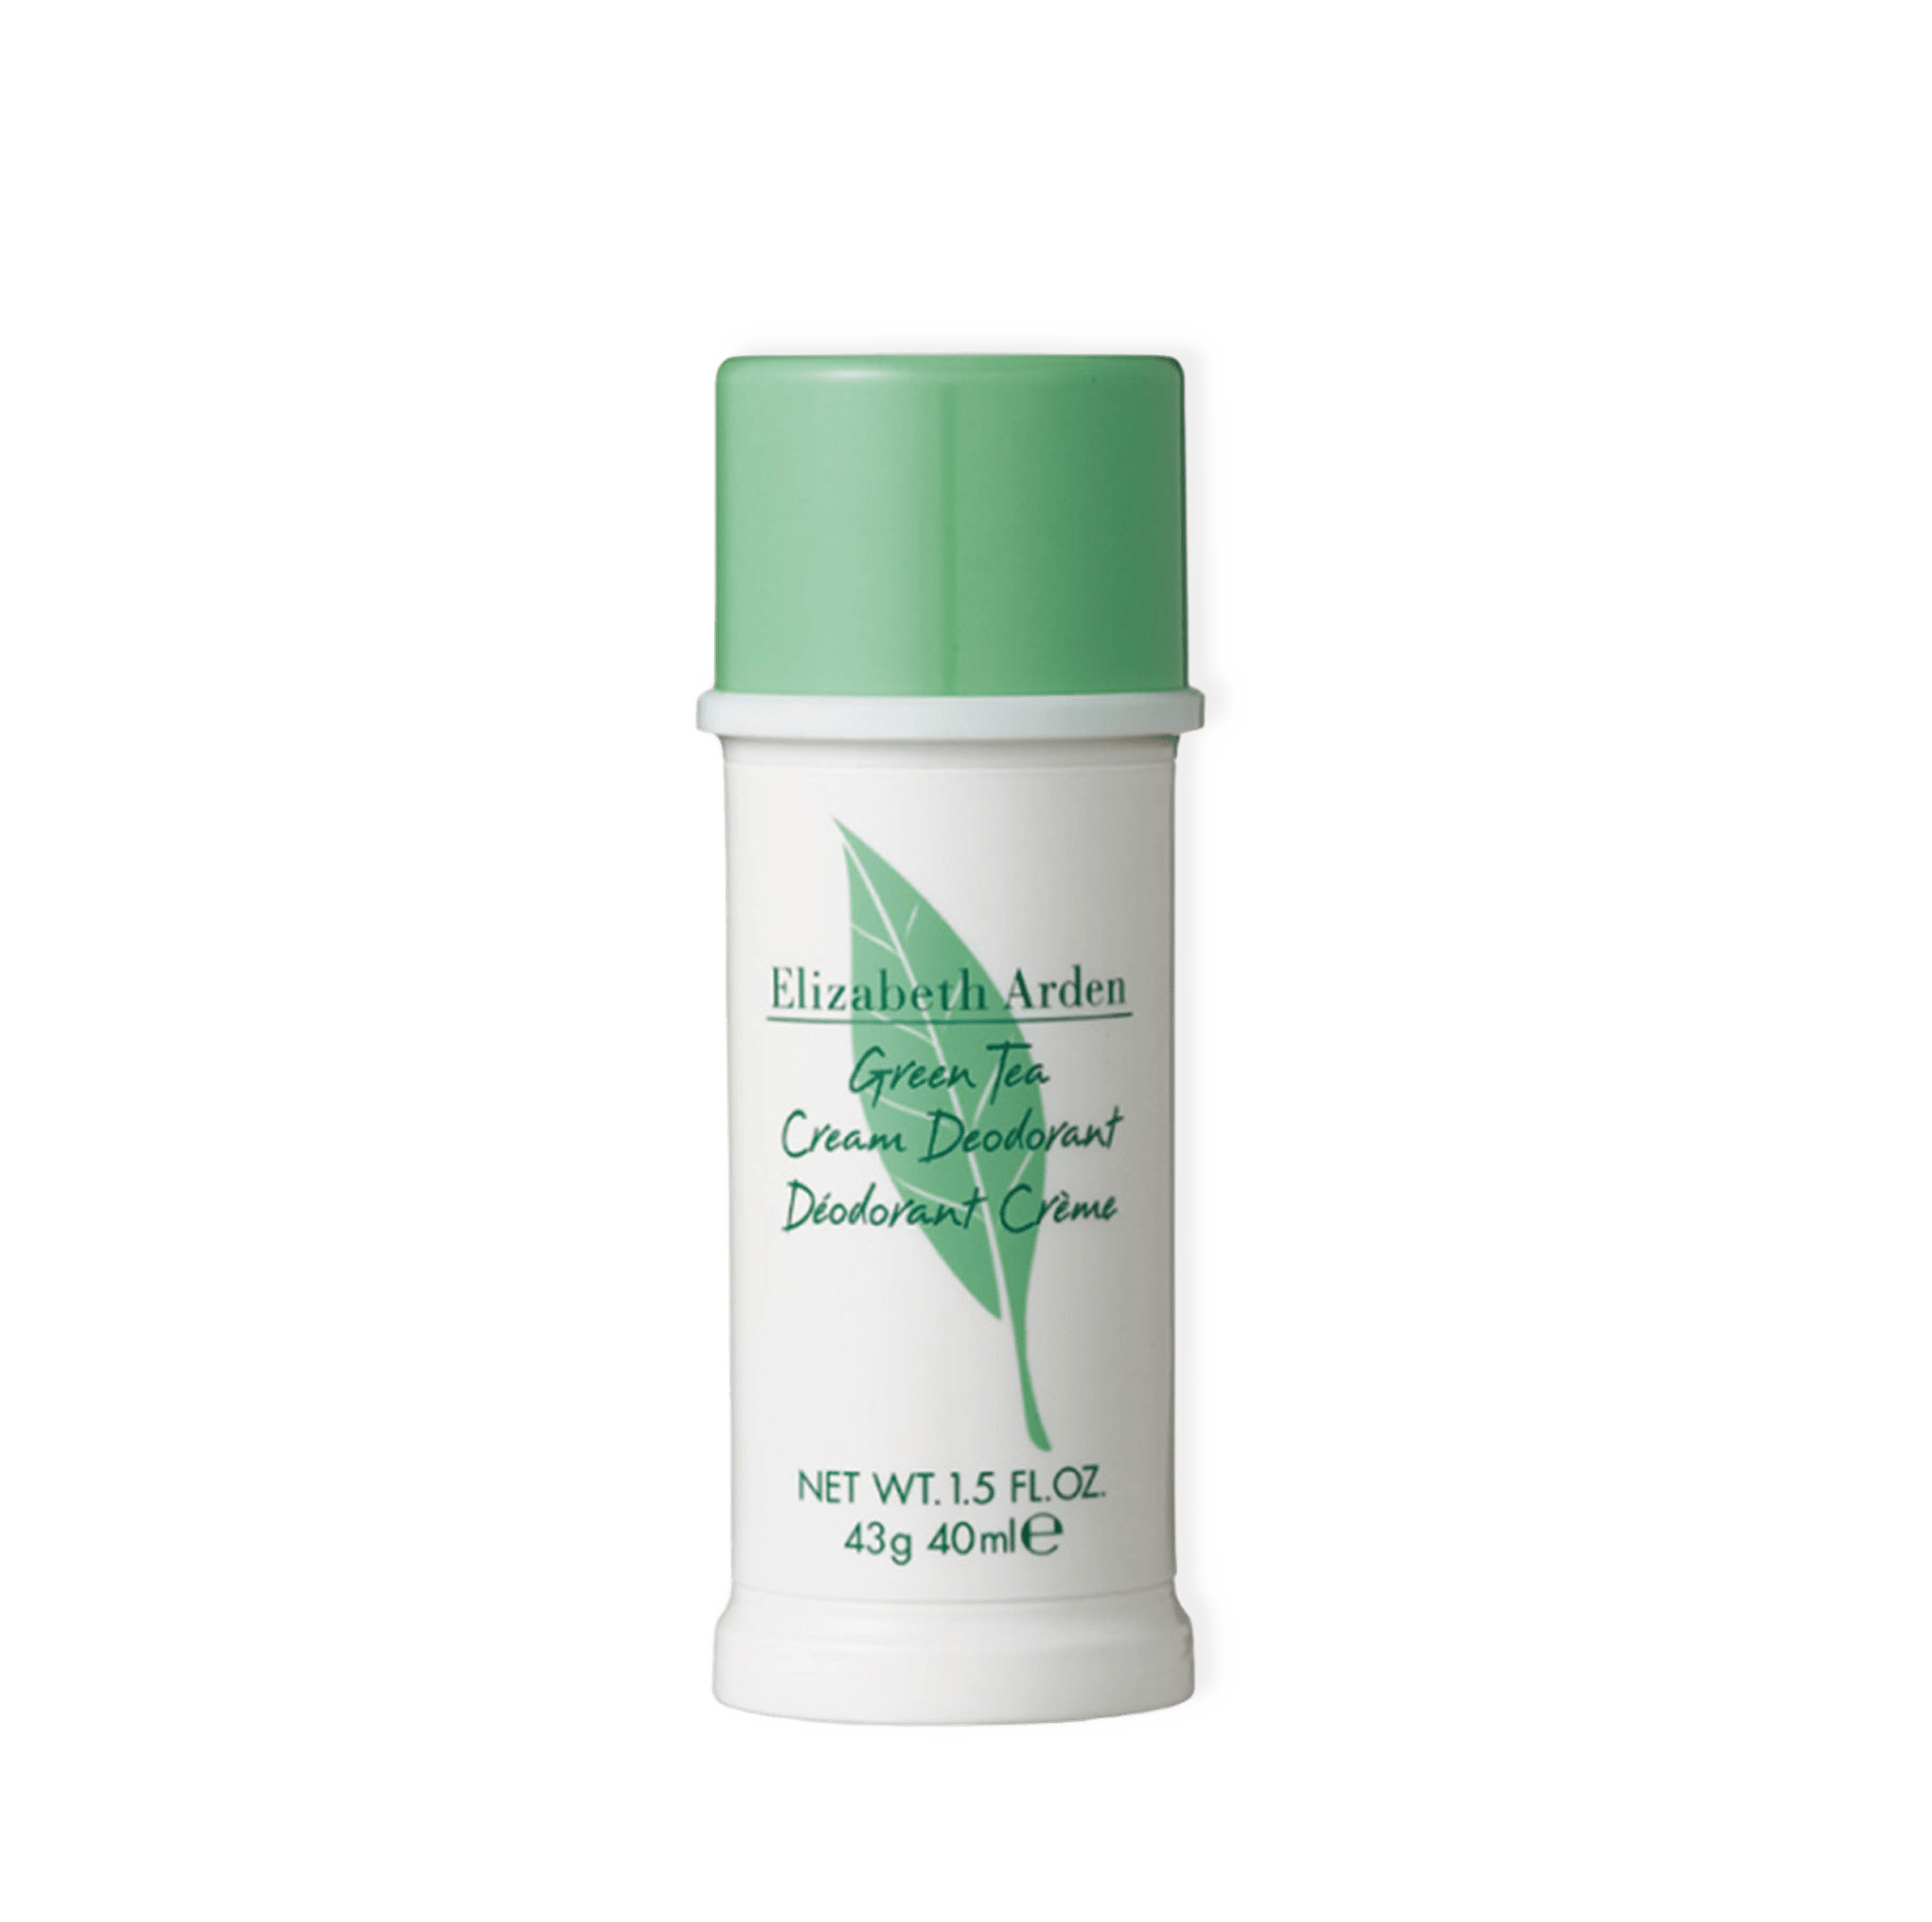 Green Tea Cream Deodorant från Elizabeth Arden